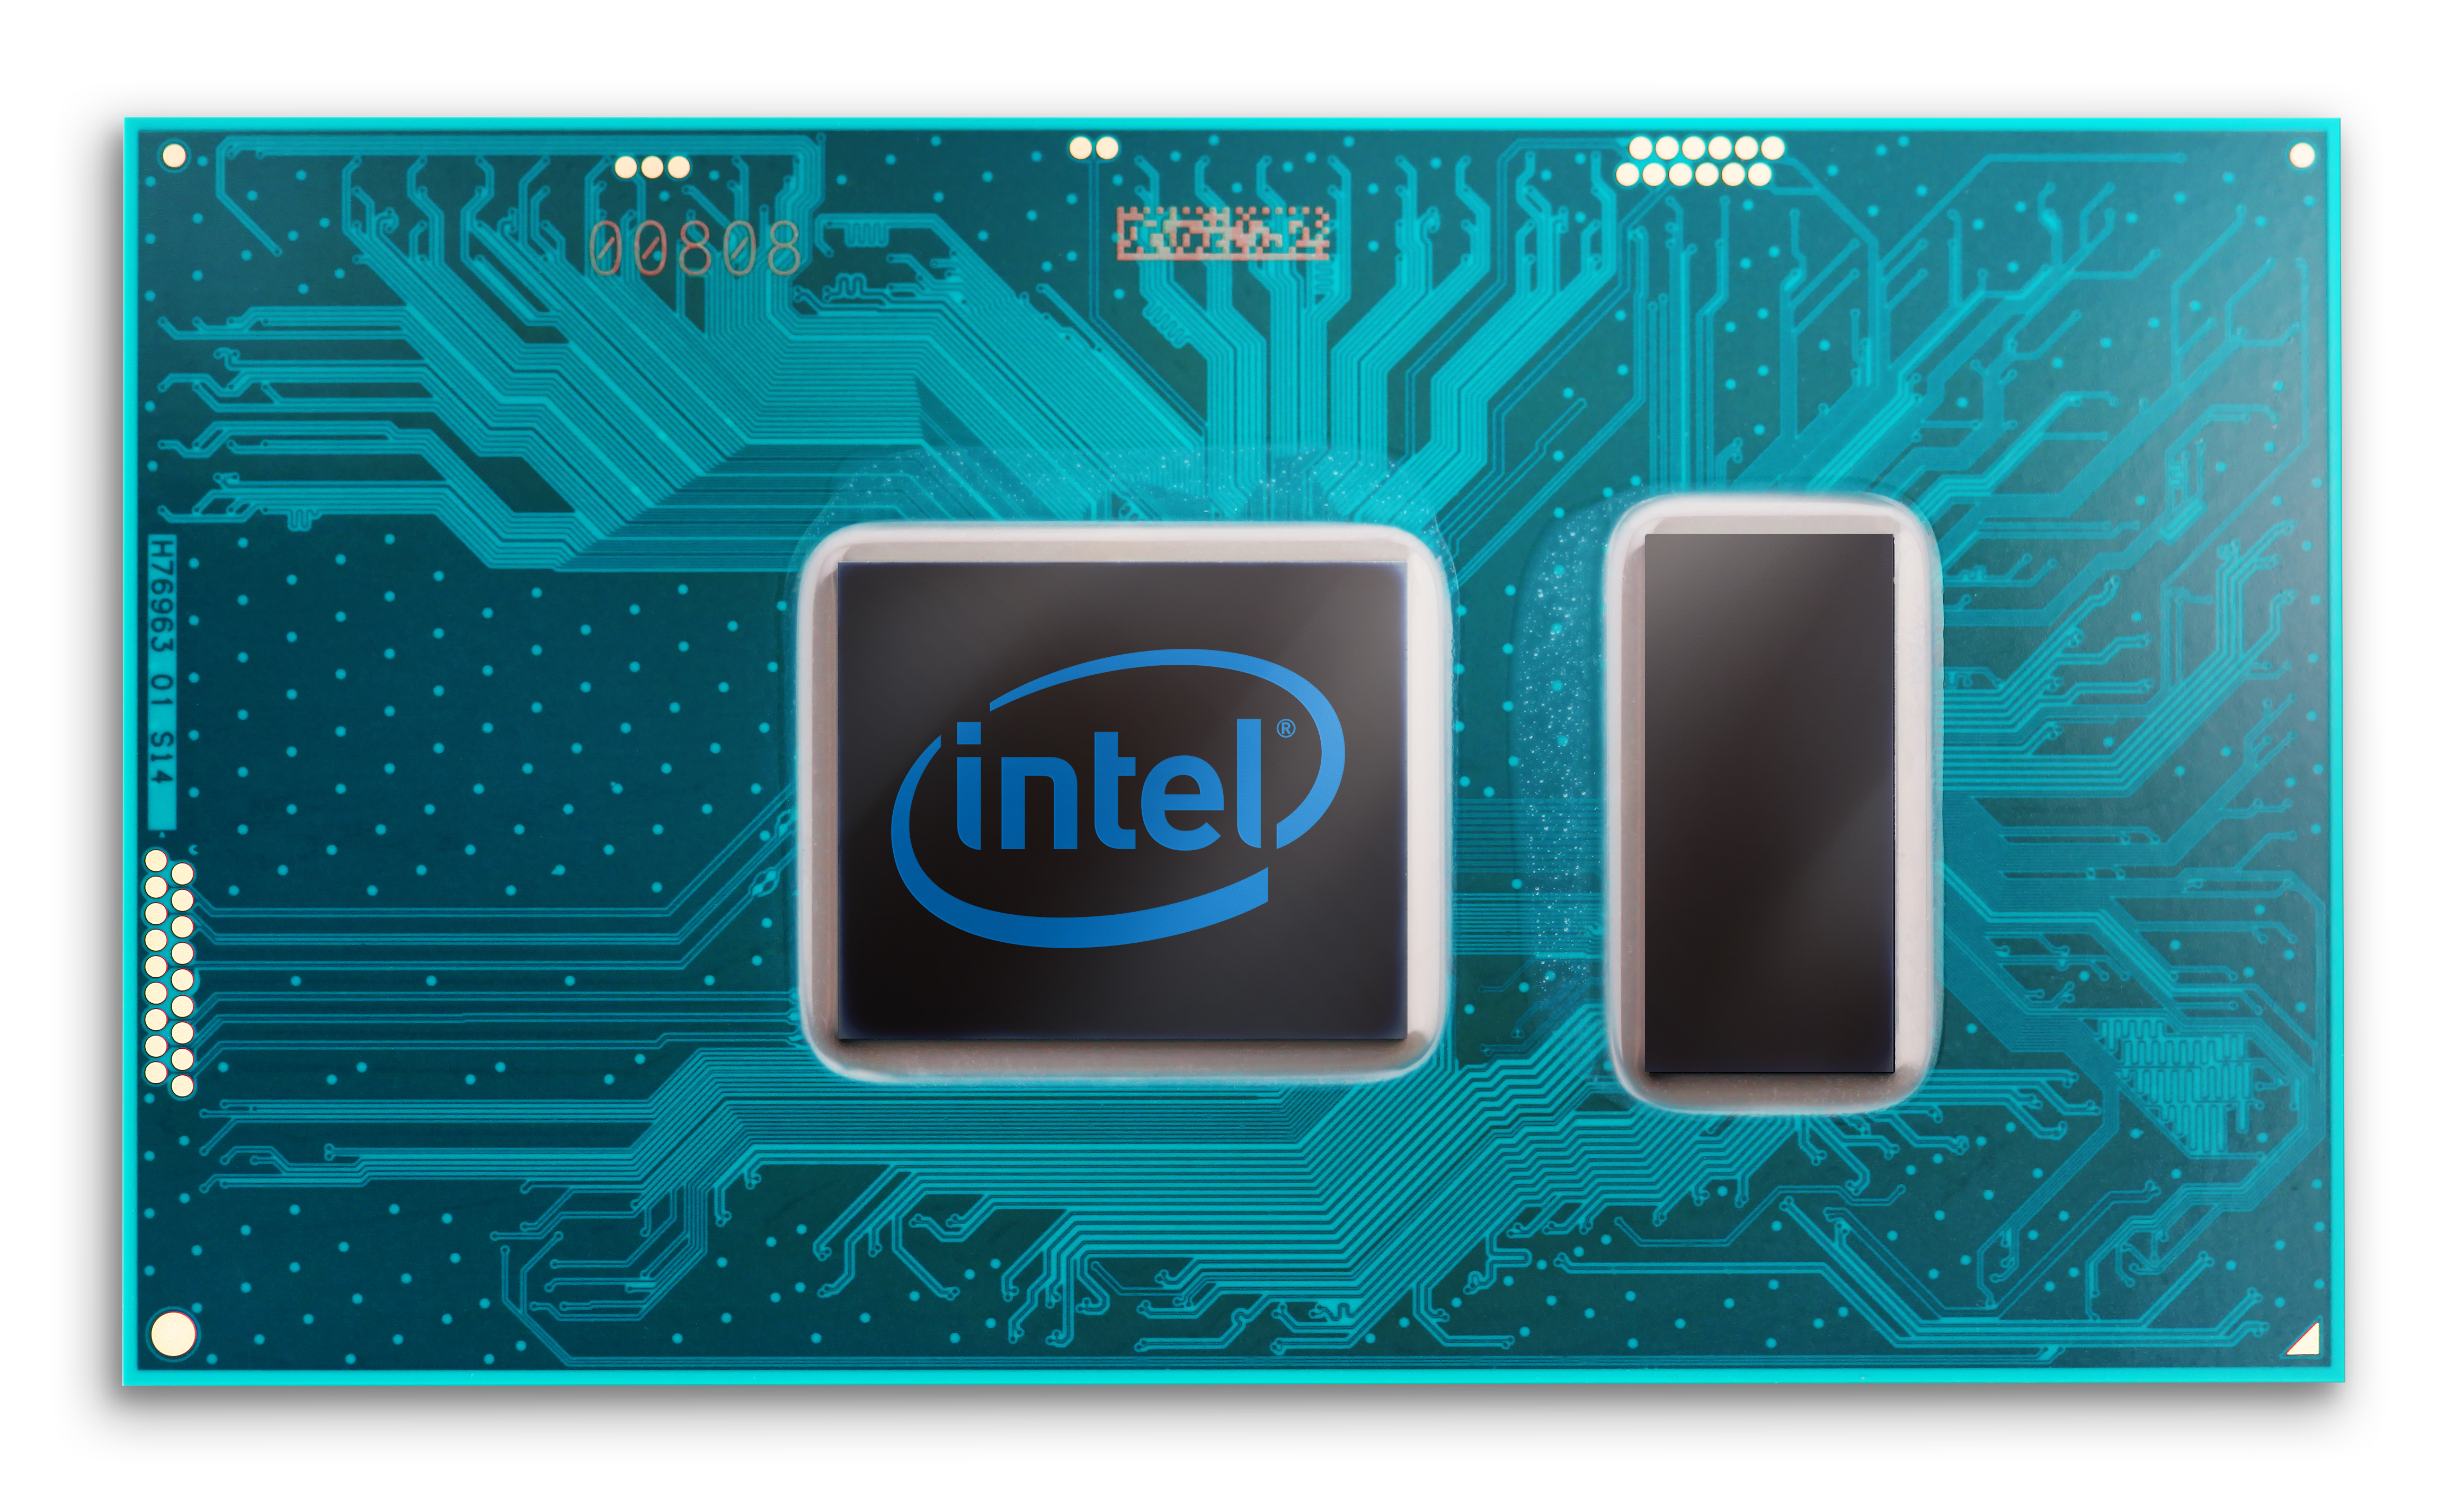 7th Gen Intel Core U-series with logo